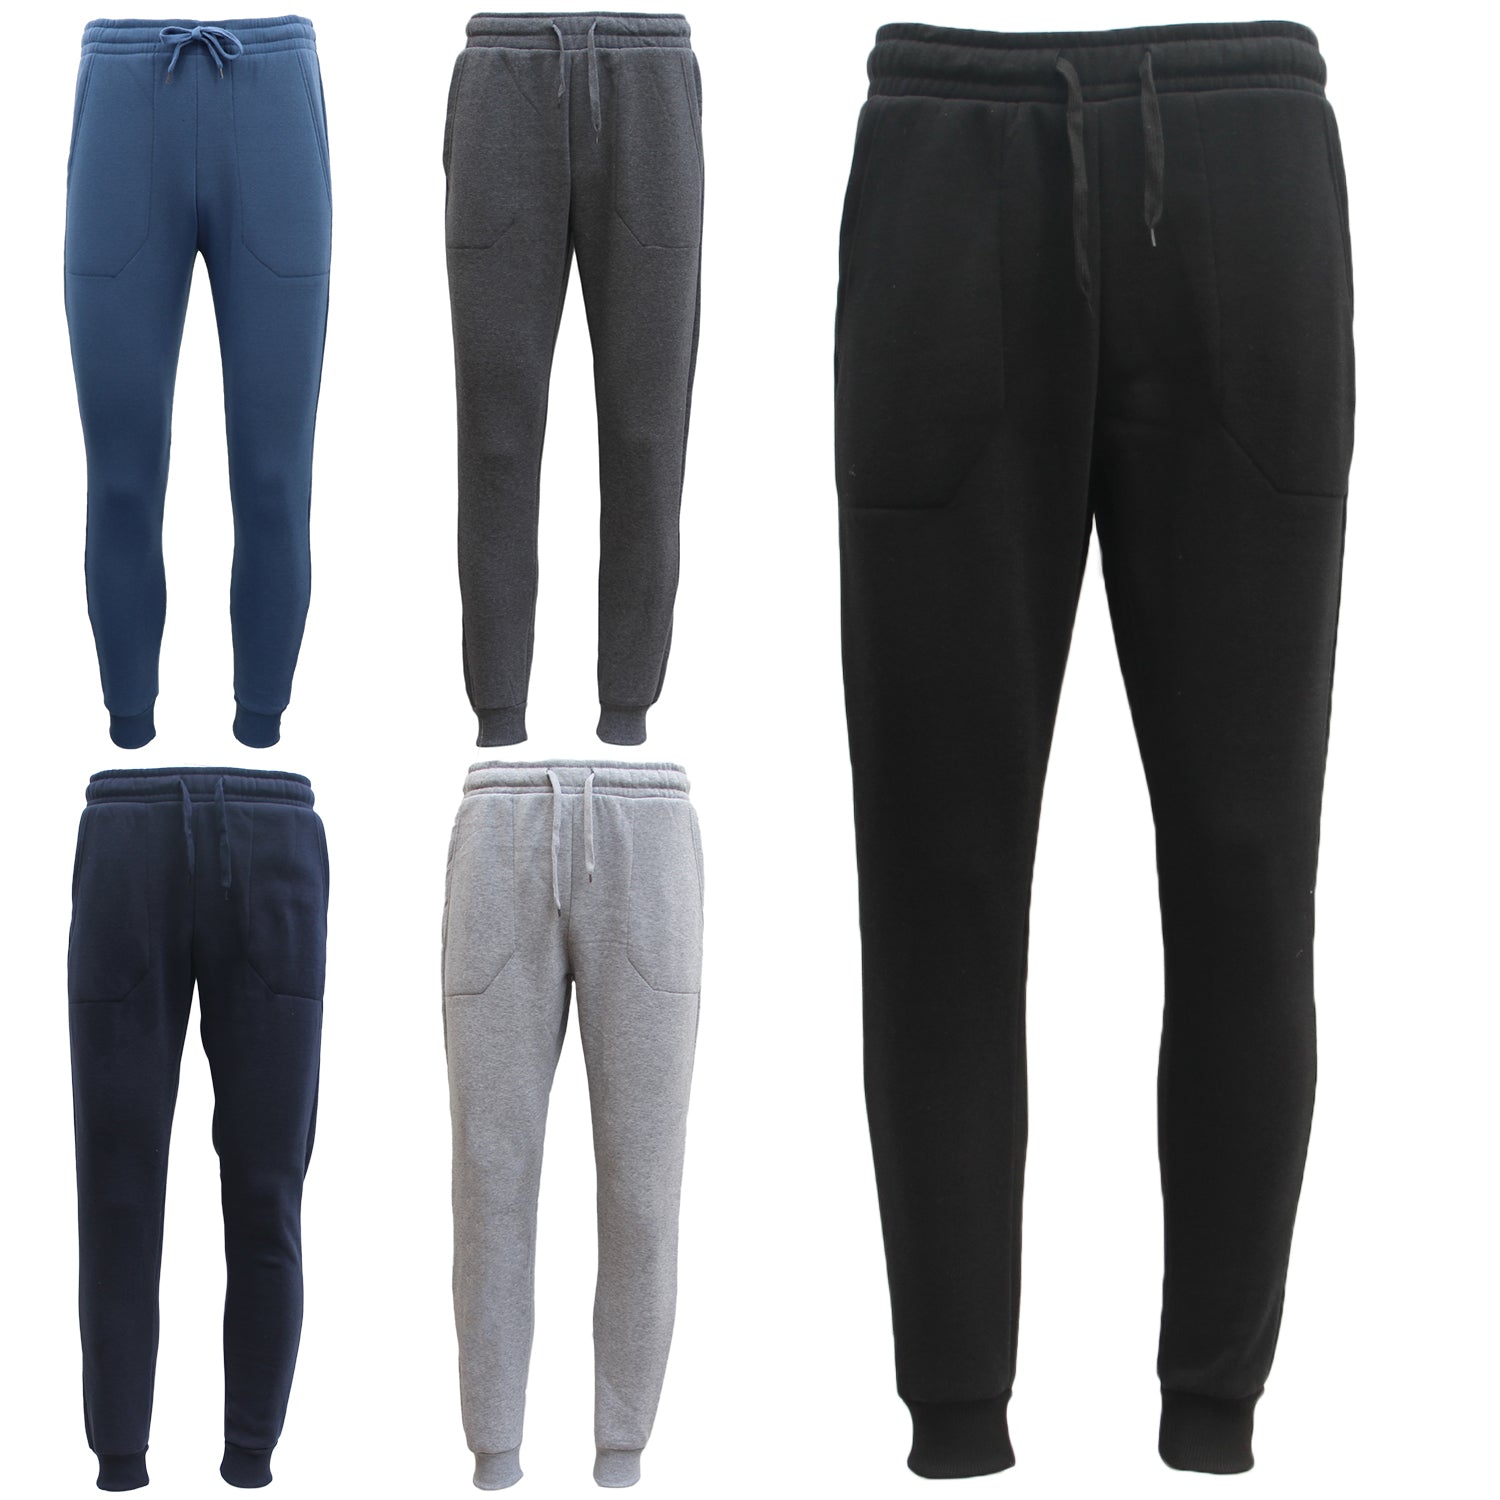 Mens Unisex Fleece Lined Sweat Track Pants Suit Casual Trackies Slim Cuff XS-6XL, Black, XS